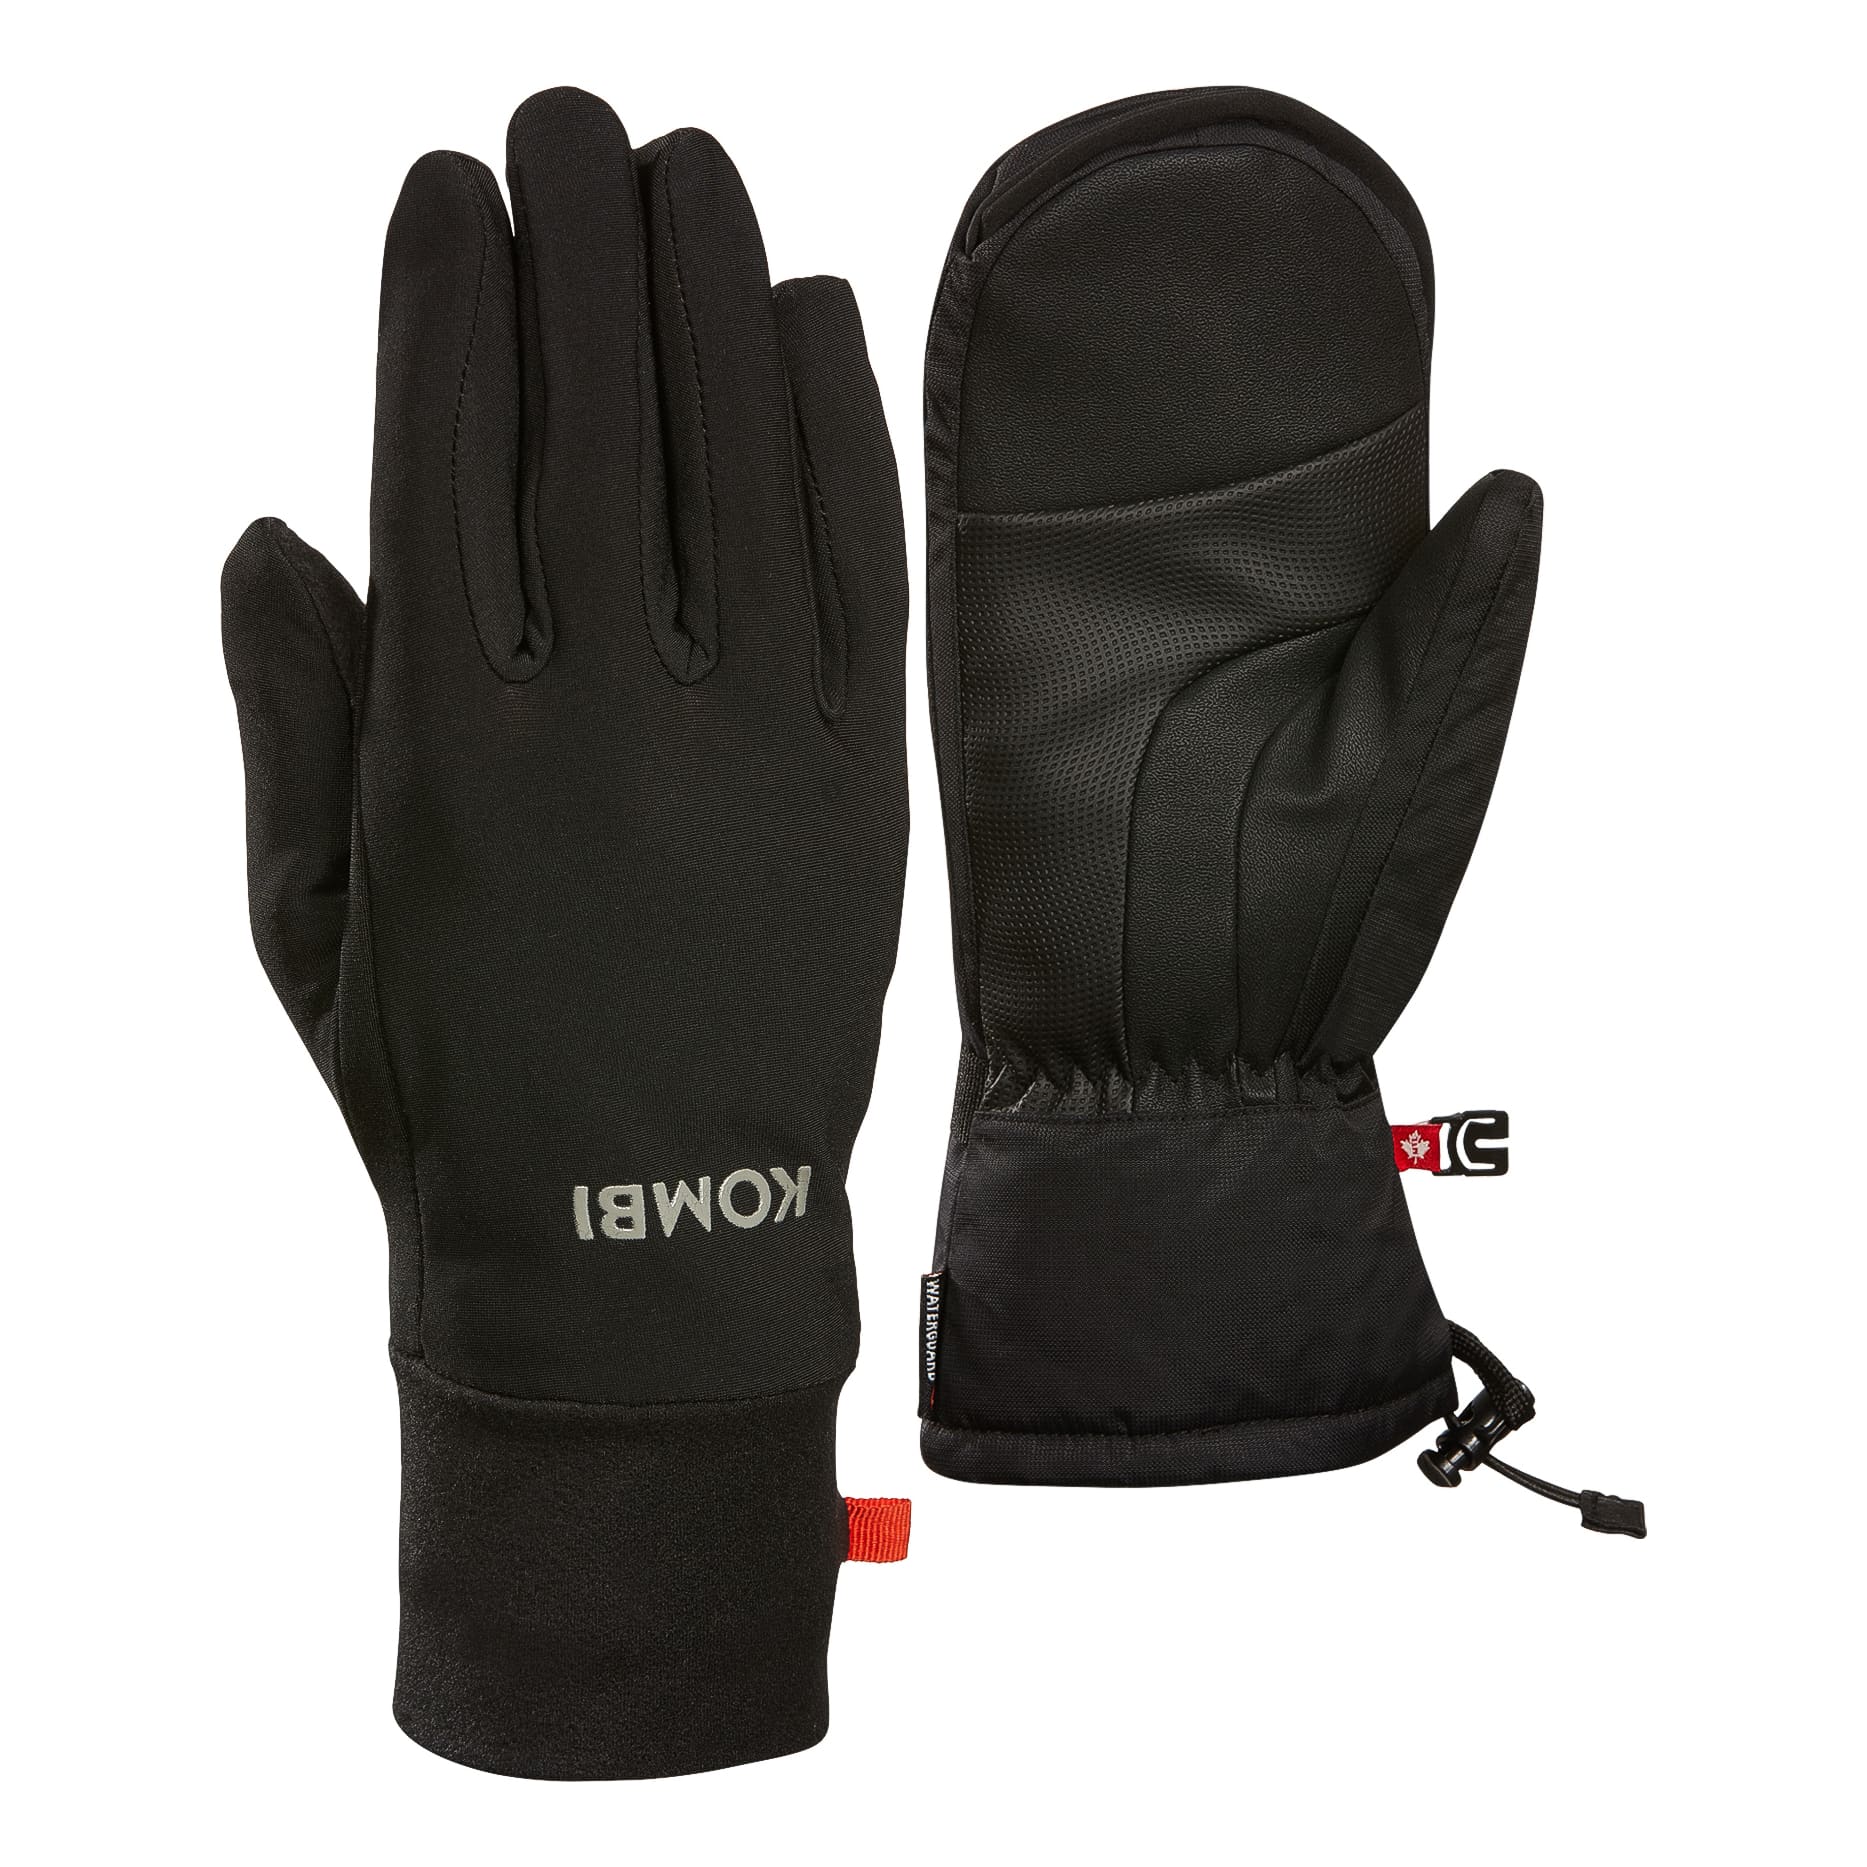 Kombi® Men’s Opener Magnetic Mittens - Asphalt - liner glove